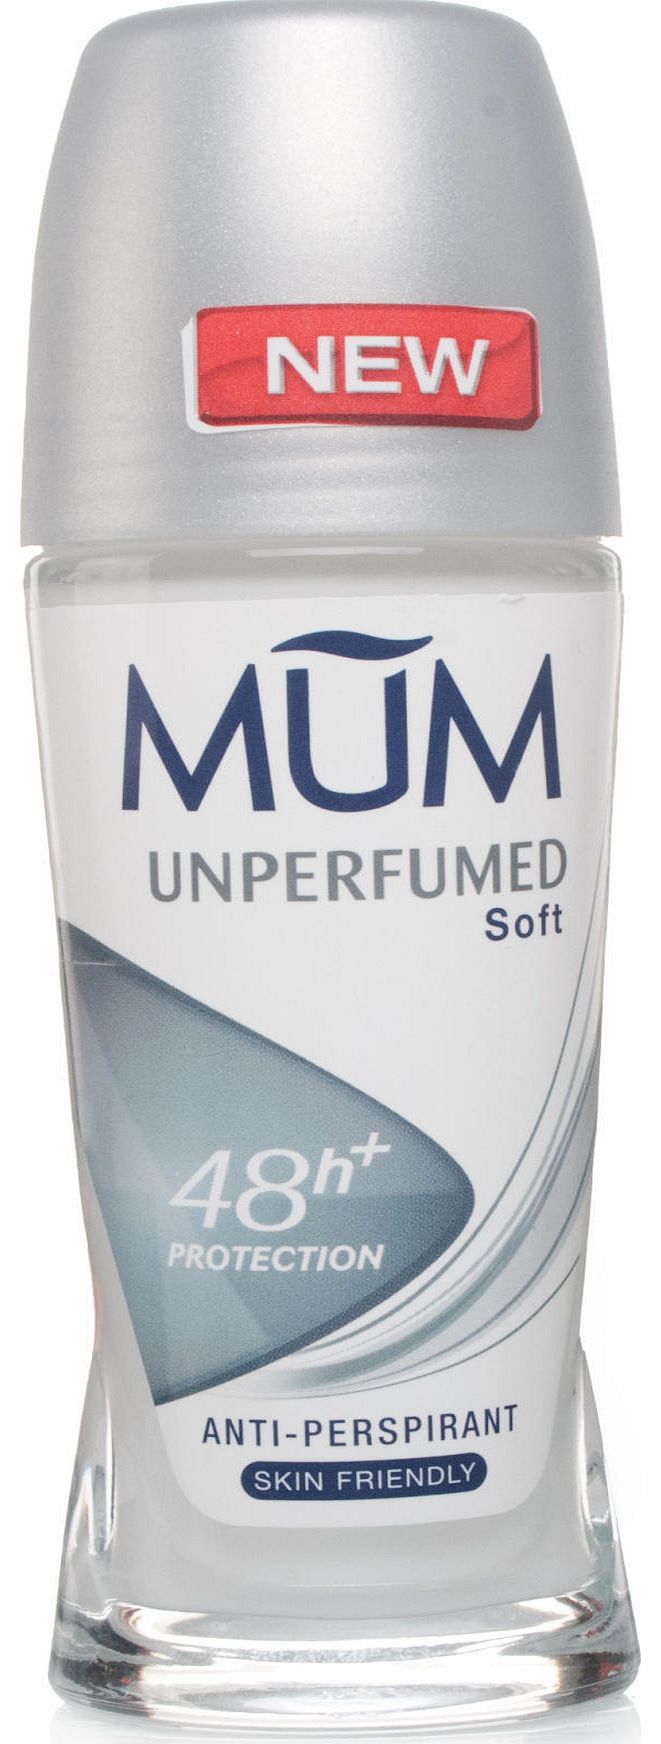 Mum Roll-On Deodorant Unperfumed Sensitive Care